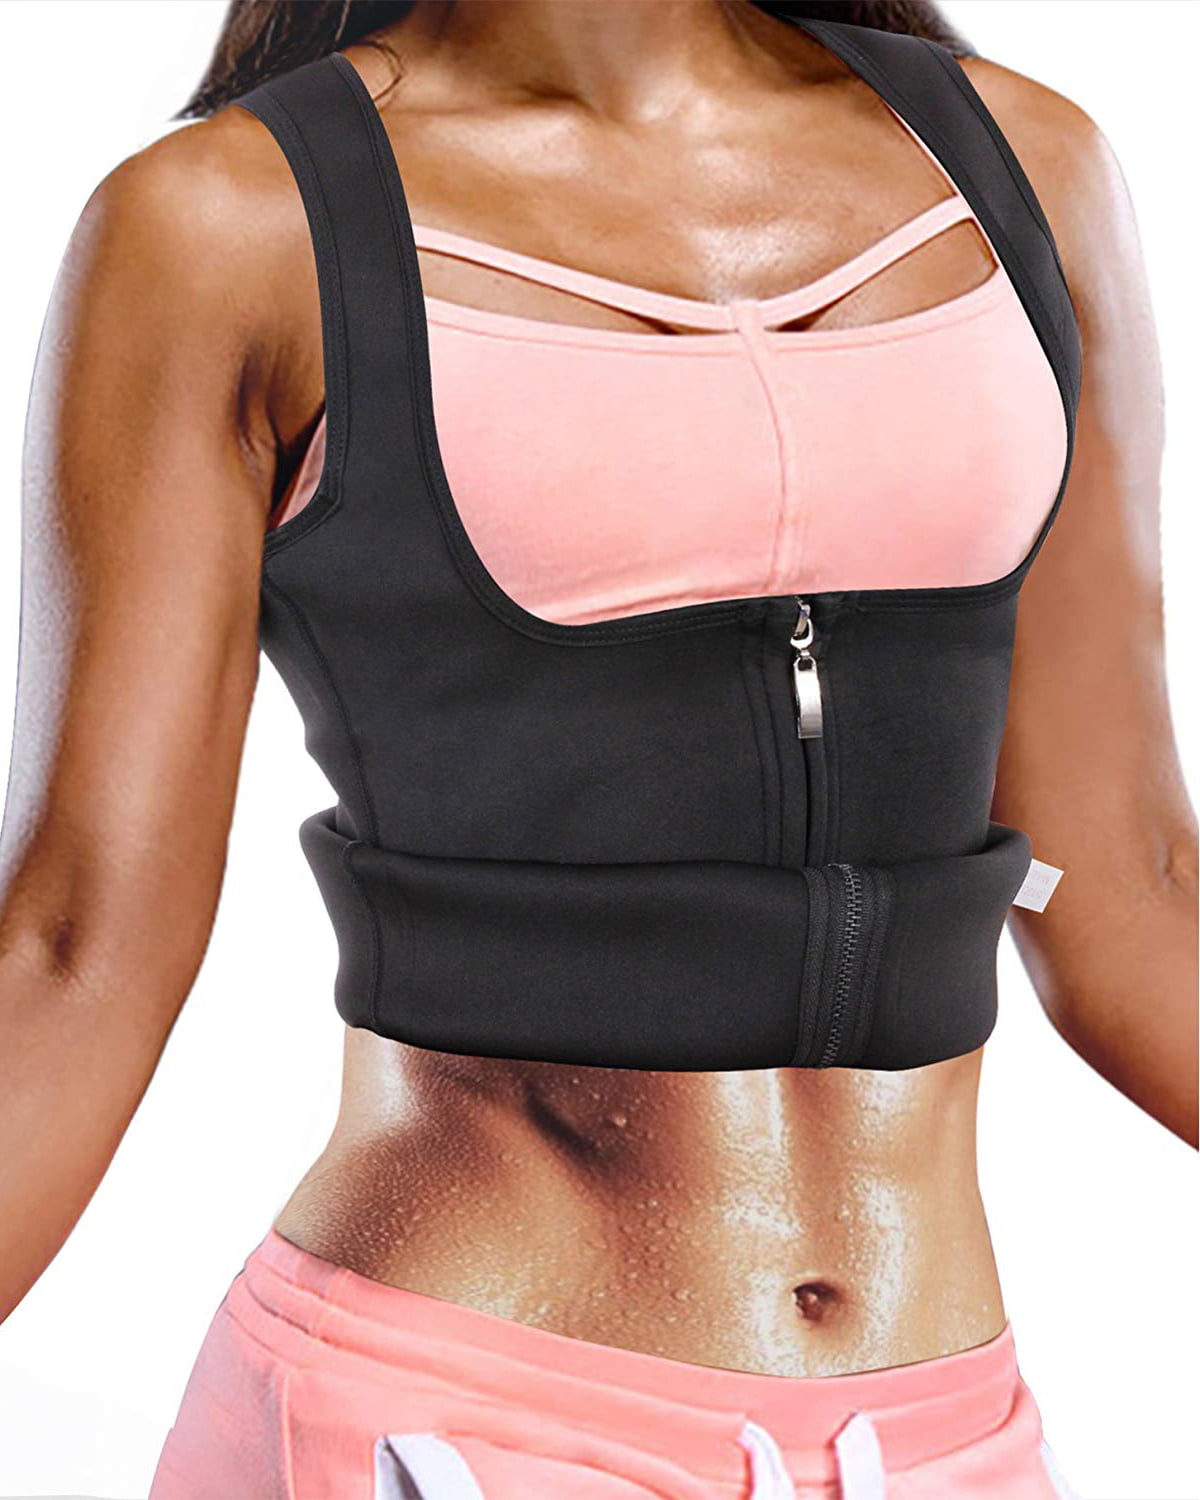 HOT Sport Sauna Sweat Waist Trainer Slimming Body Shaper Vest Tank Top for Women 